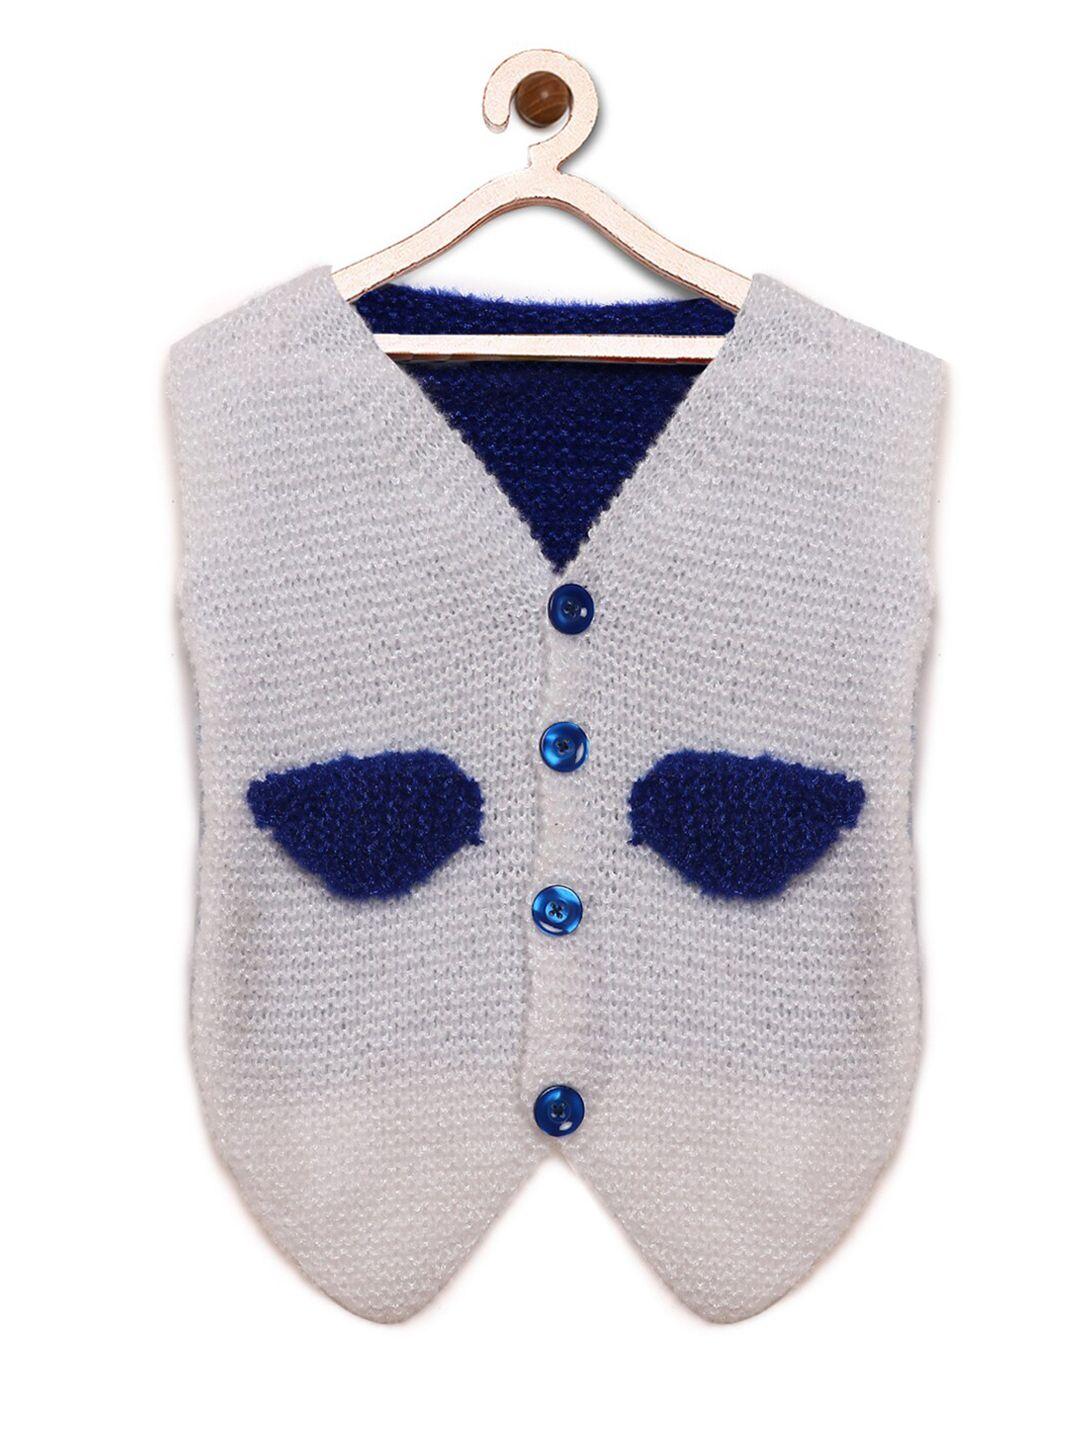 chutput unisex kids white & blue sweater vest